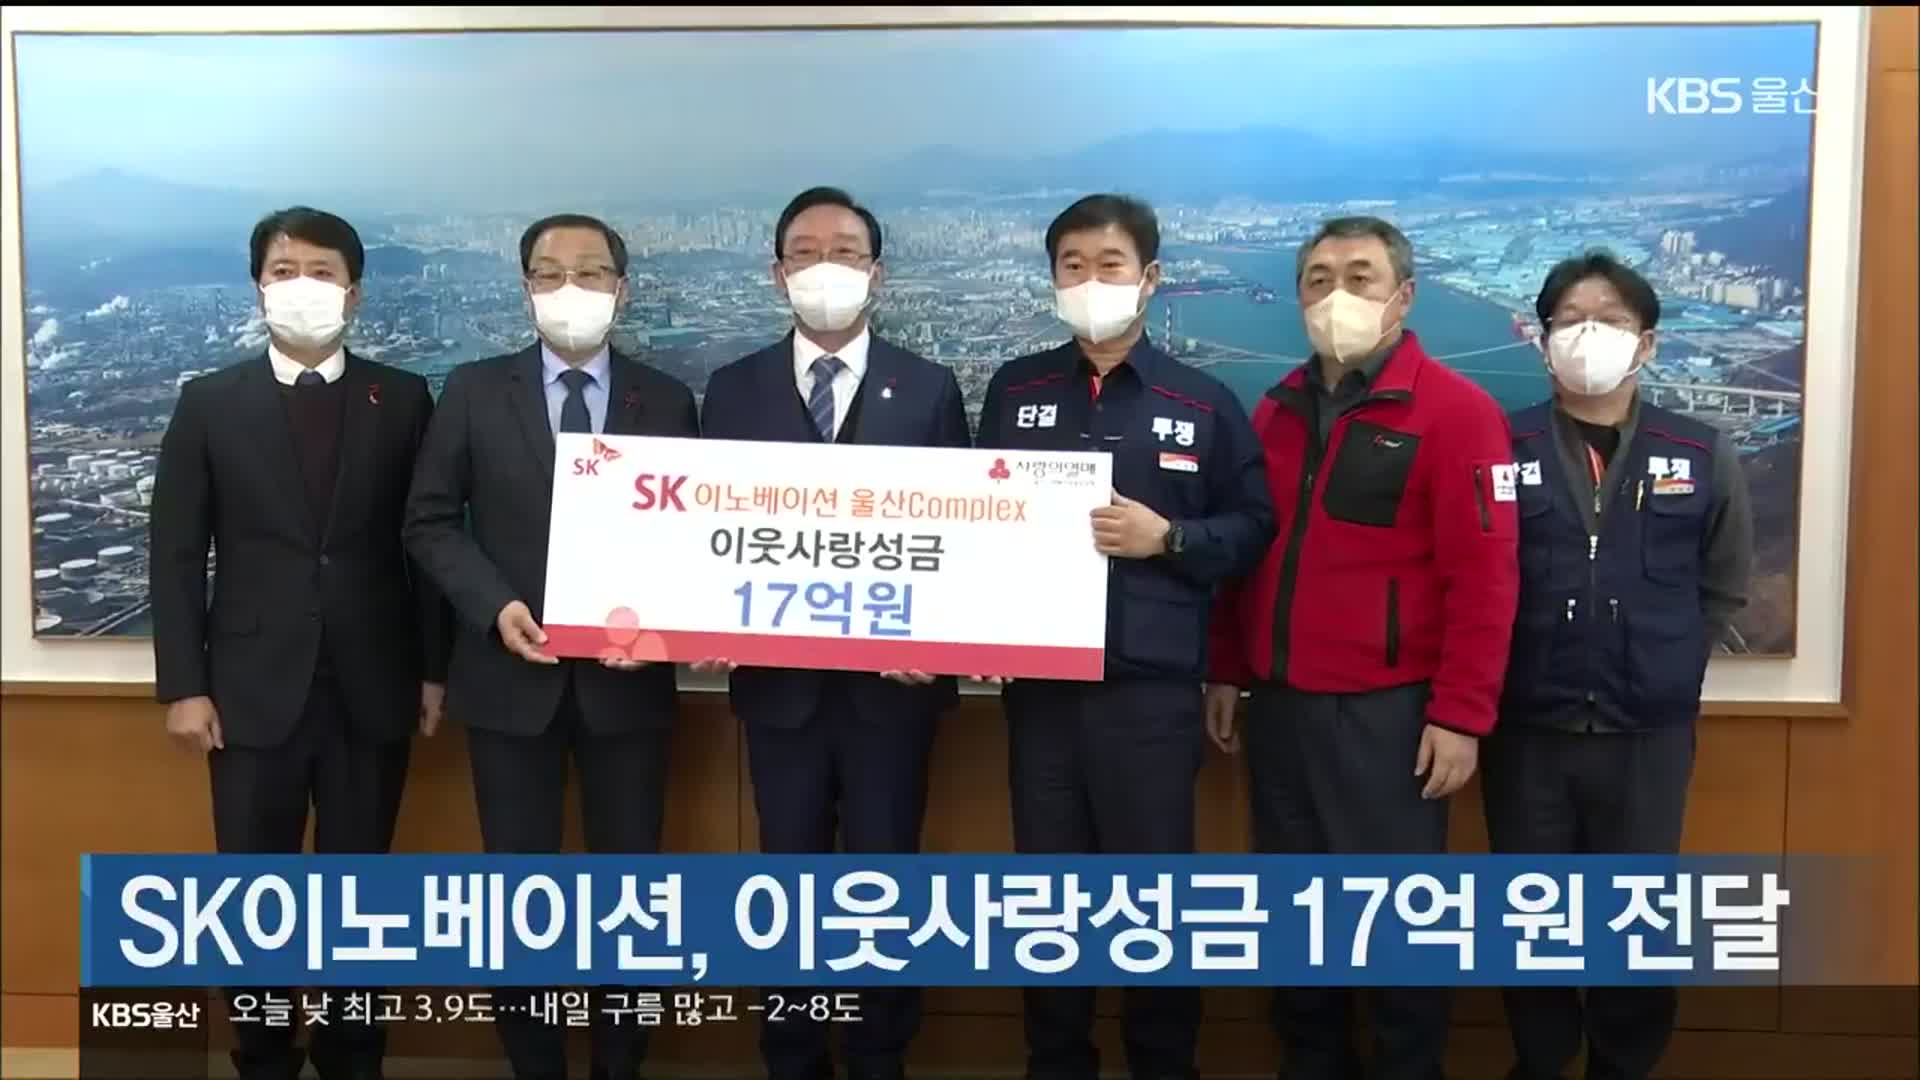 SK이노베이션, 이웃사랑성금 17억 원 전달